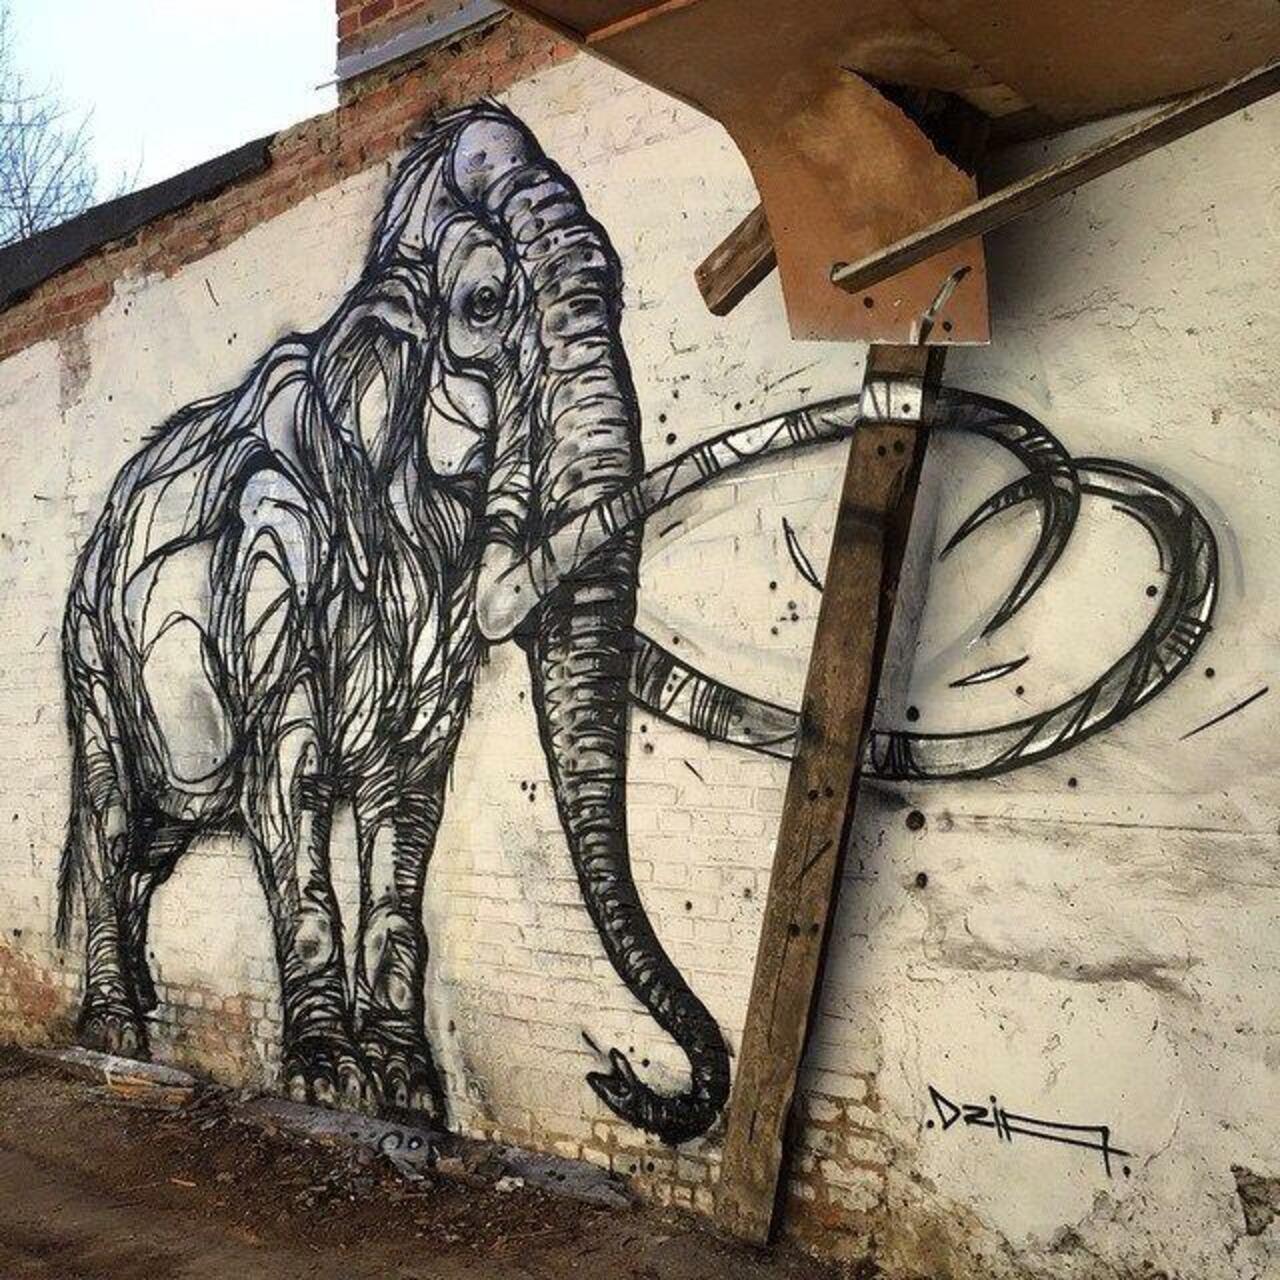 Mammoth. New nature in Street Art wall by DZIA 

#art #graffiti #mural #streetart http://t.co/vYHW0O0st8